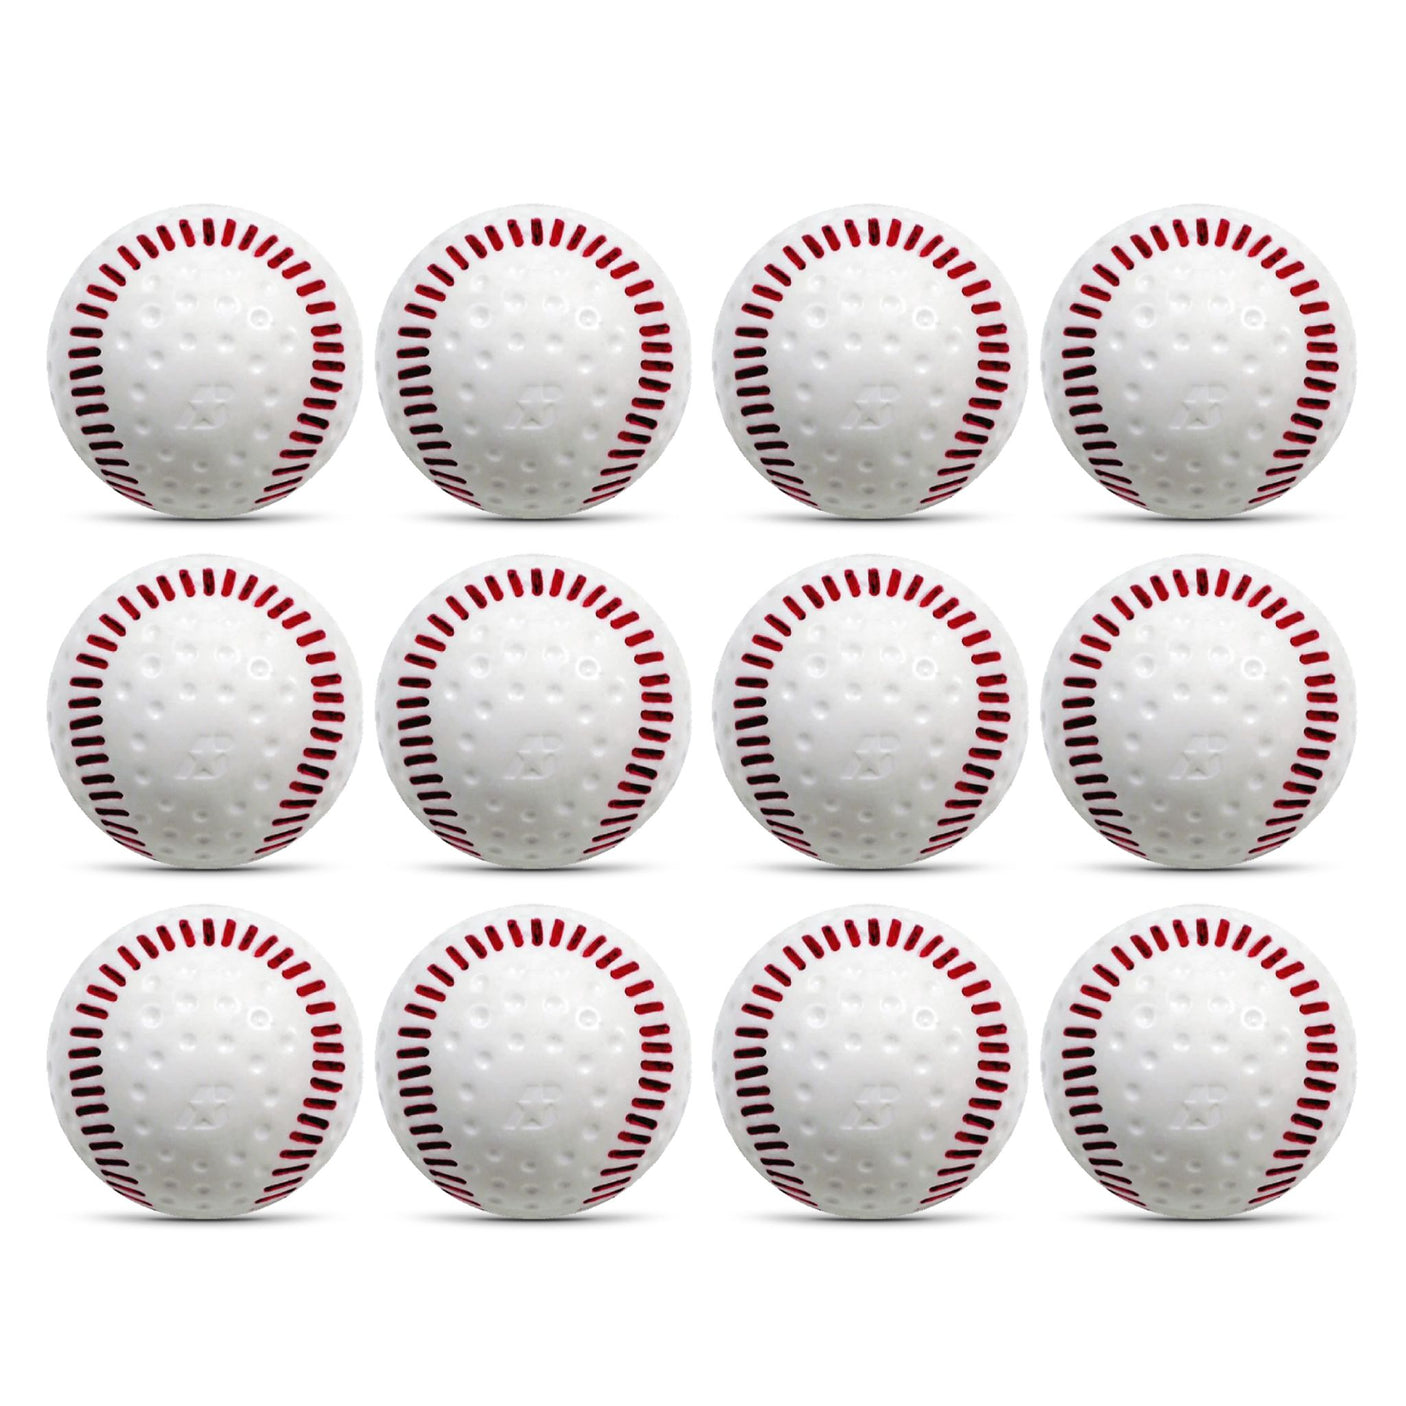 Axe Bomb Training Balls - (Softball or Baseball) 1 Dozen